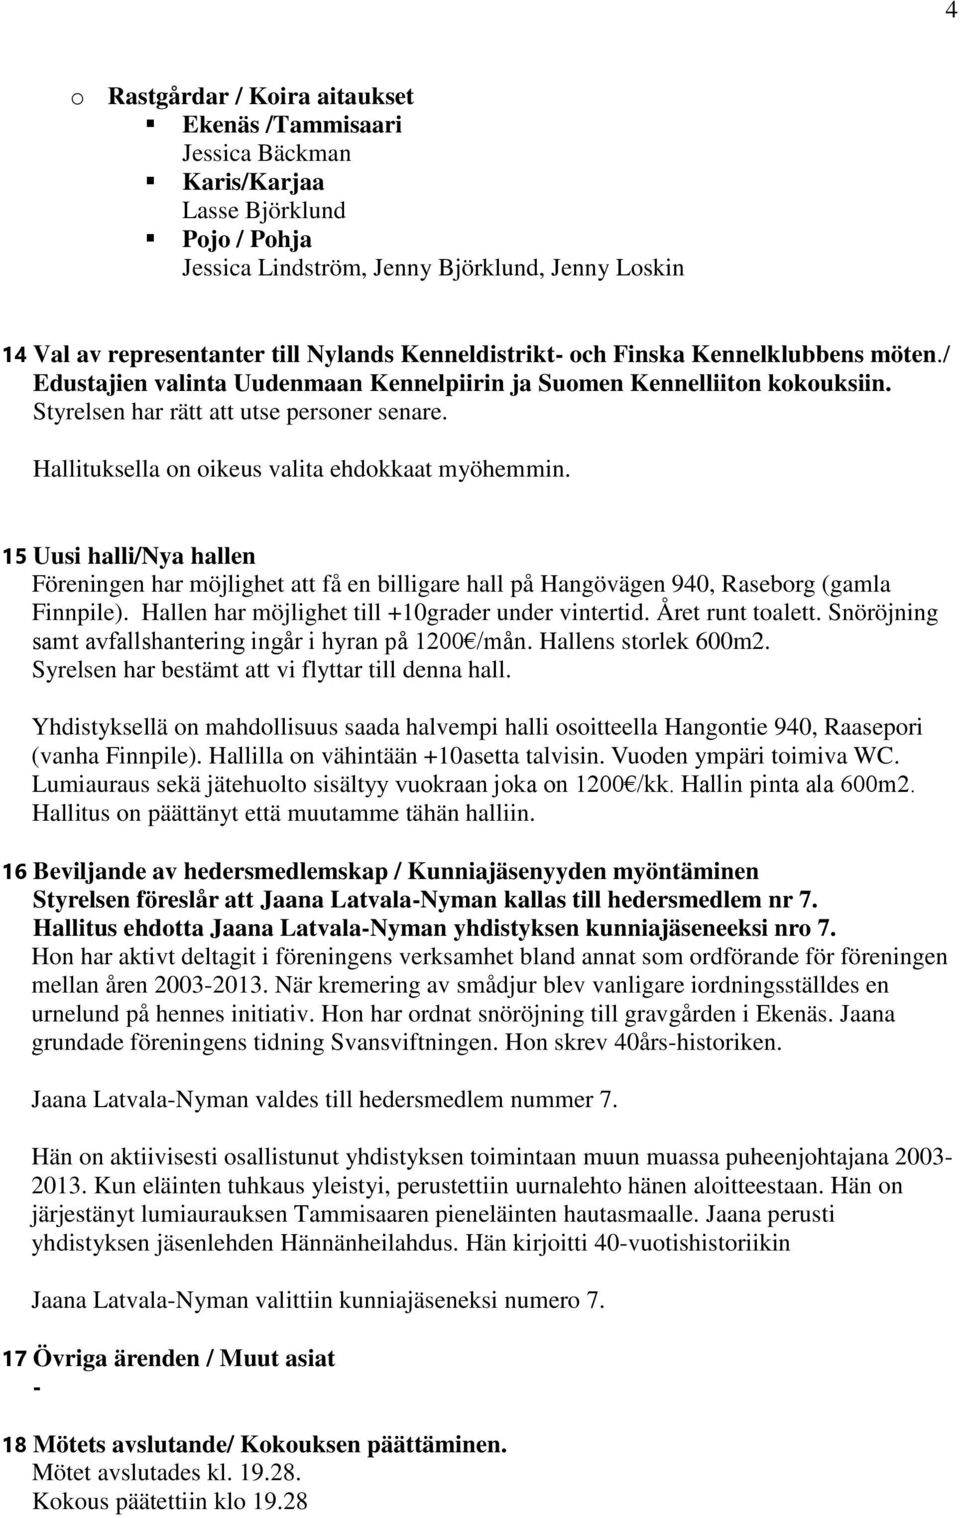 Hallituksella on oikeus valita ehdokkaat myöhemmin. 15 Uusi halli/nya hallen Föreningen har möjlighet att få en billigare hall på Hangövägen 940, Raseborg (gamla Finnpile).